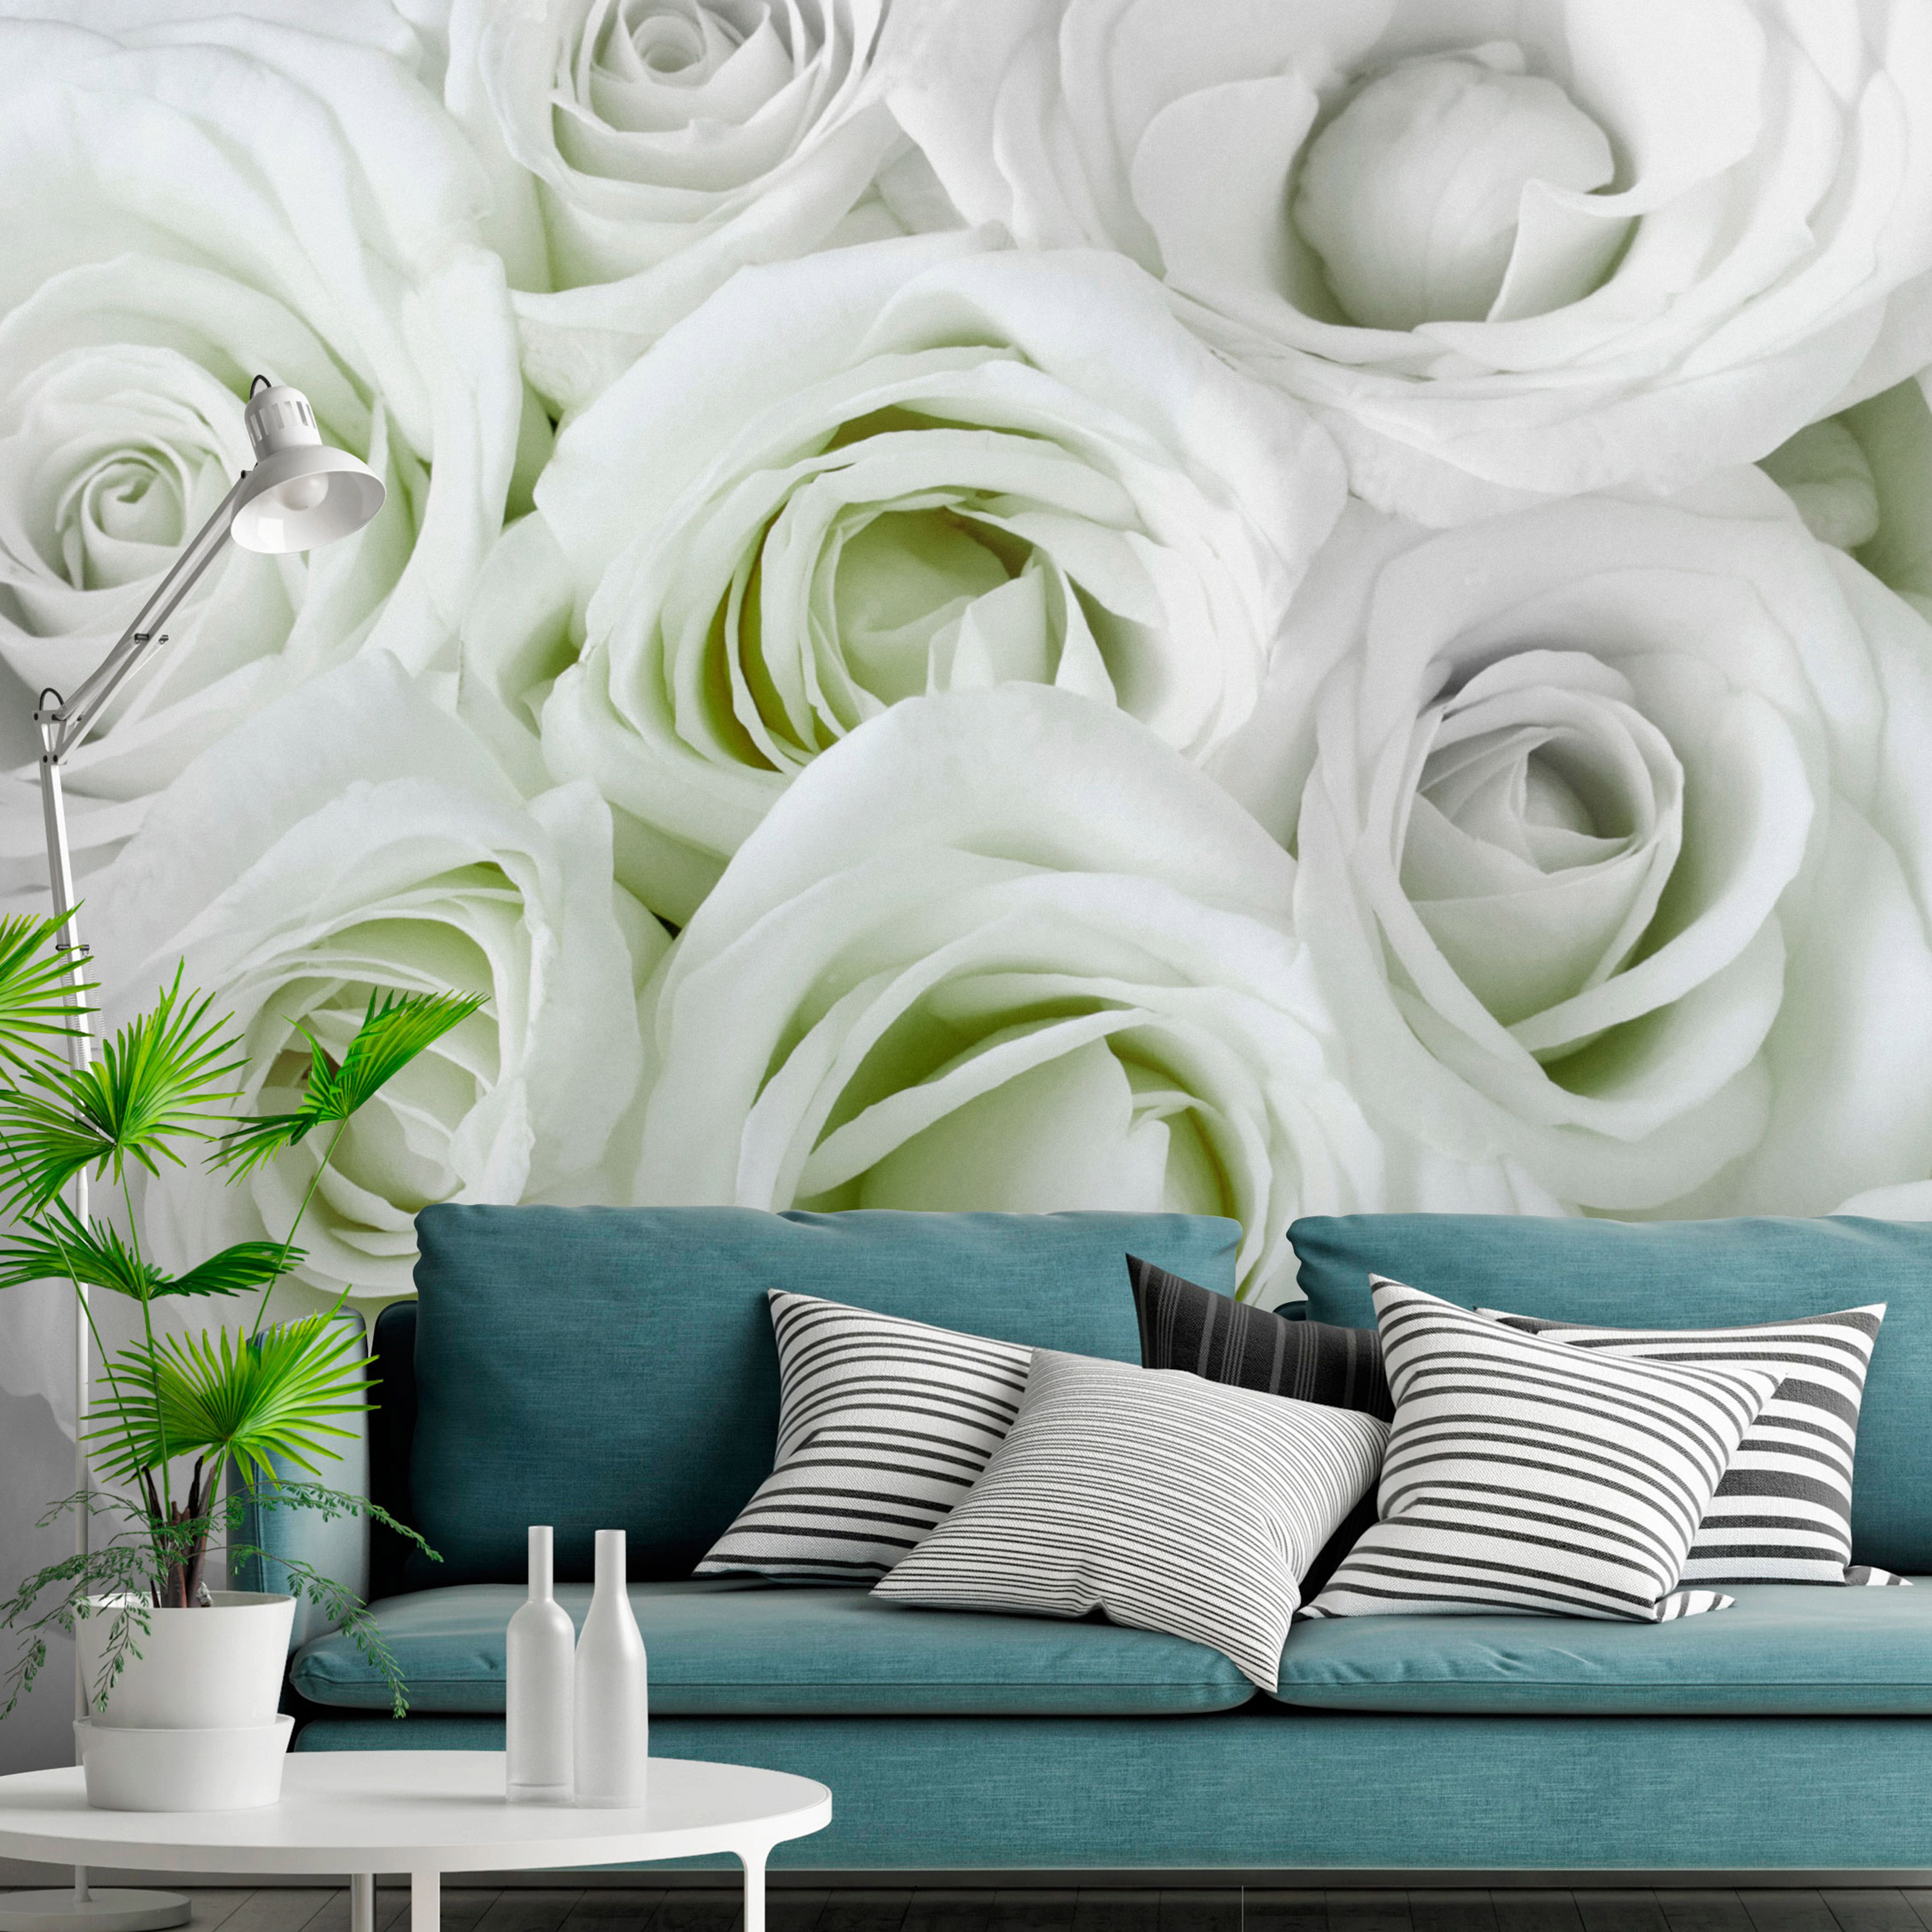 Self-adhesive Wallpaper - Satin Rose (Green) - 441x315